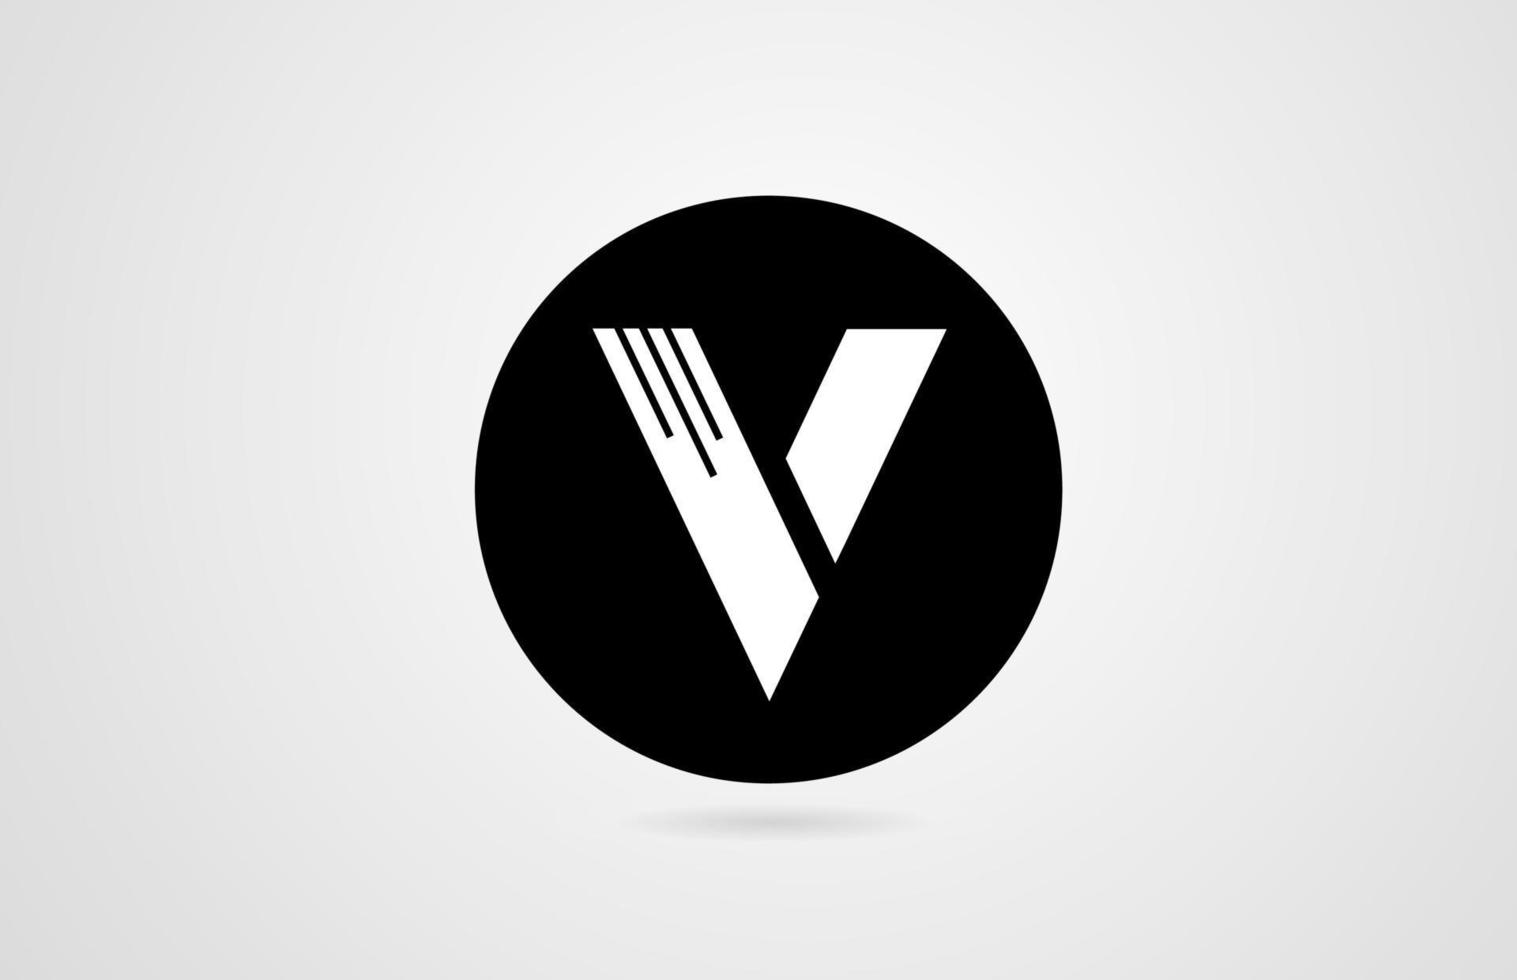 v letra do alfabeto branco círculo preto empresa logotipo ícone design corporativo vetor